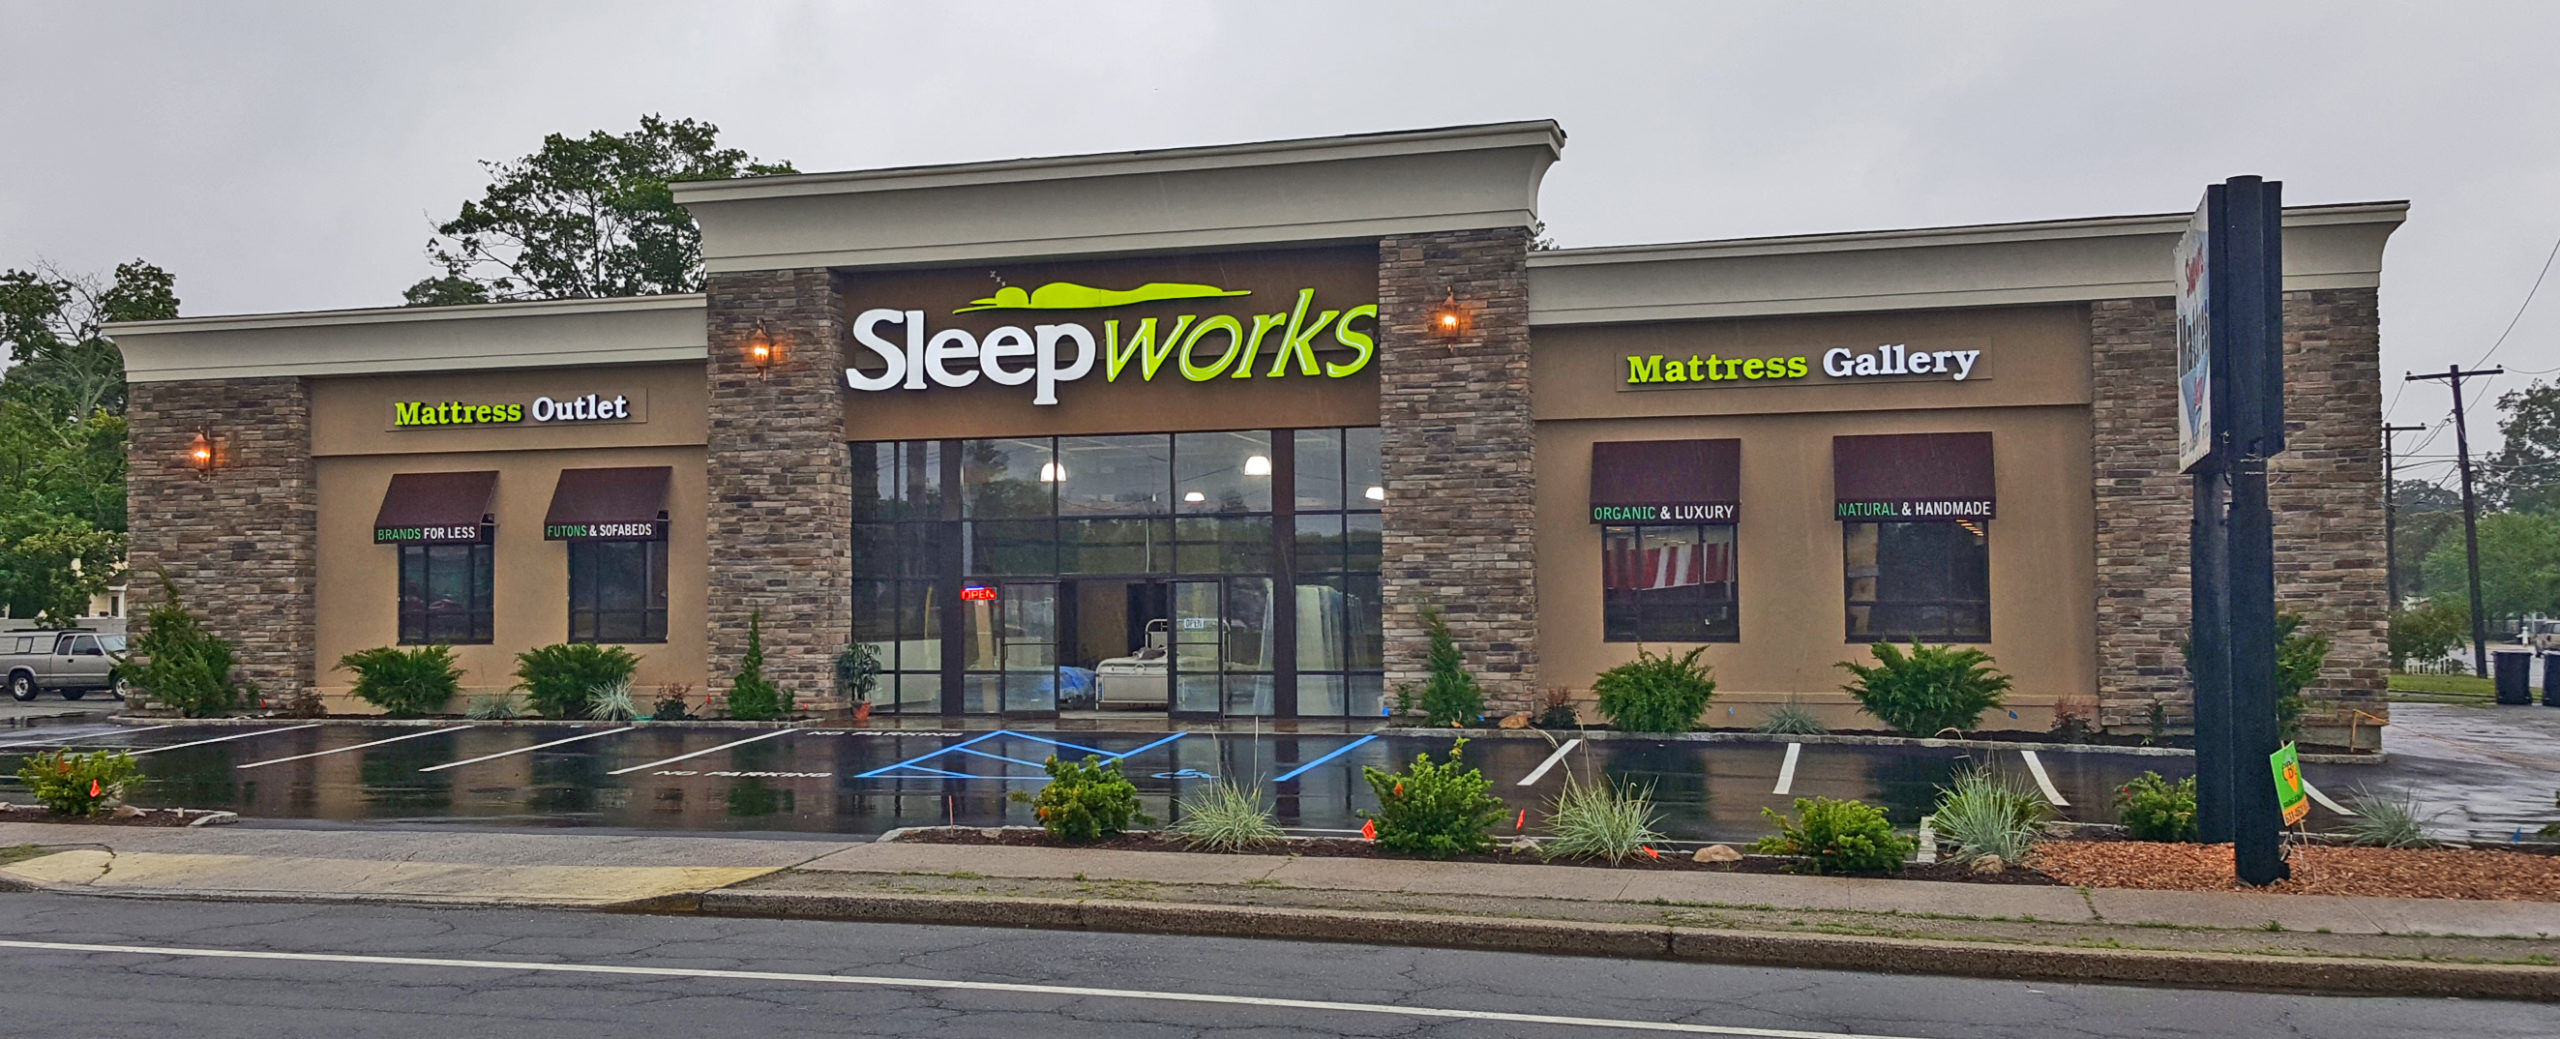 Sleepworks-mattress-and-futon-store-bayshore-ny